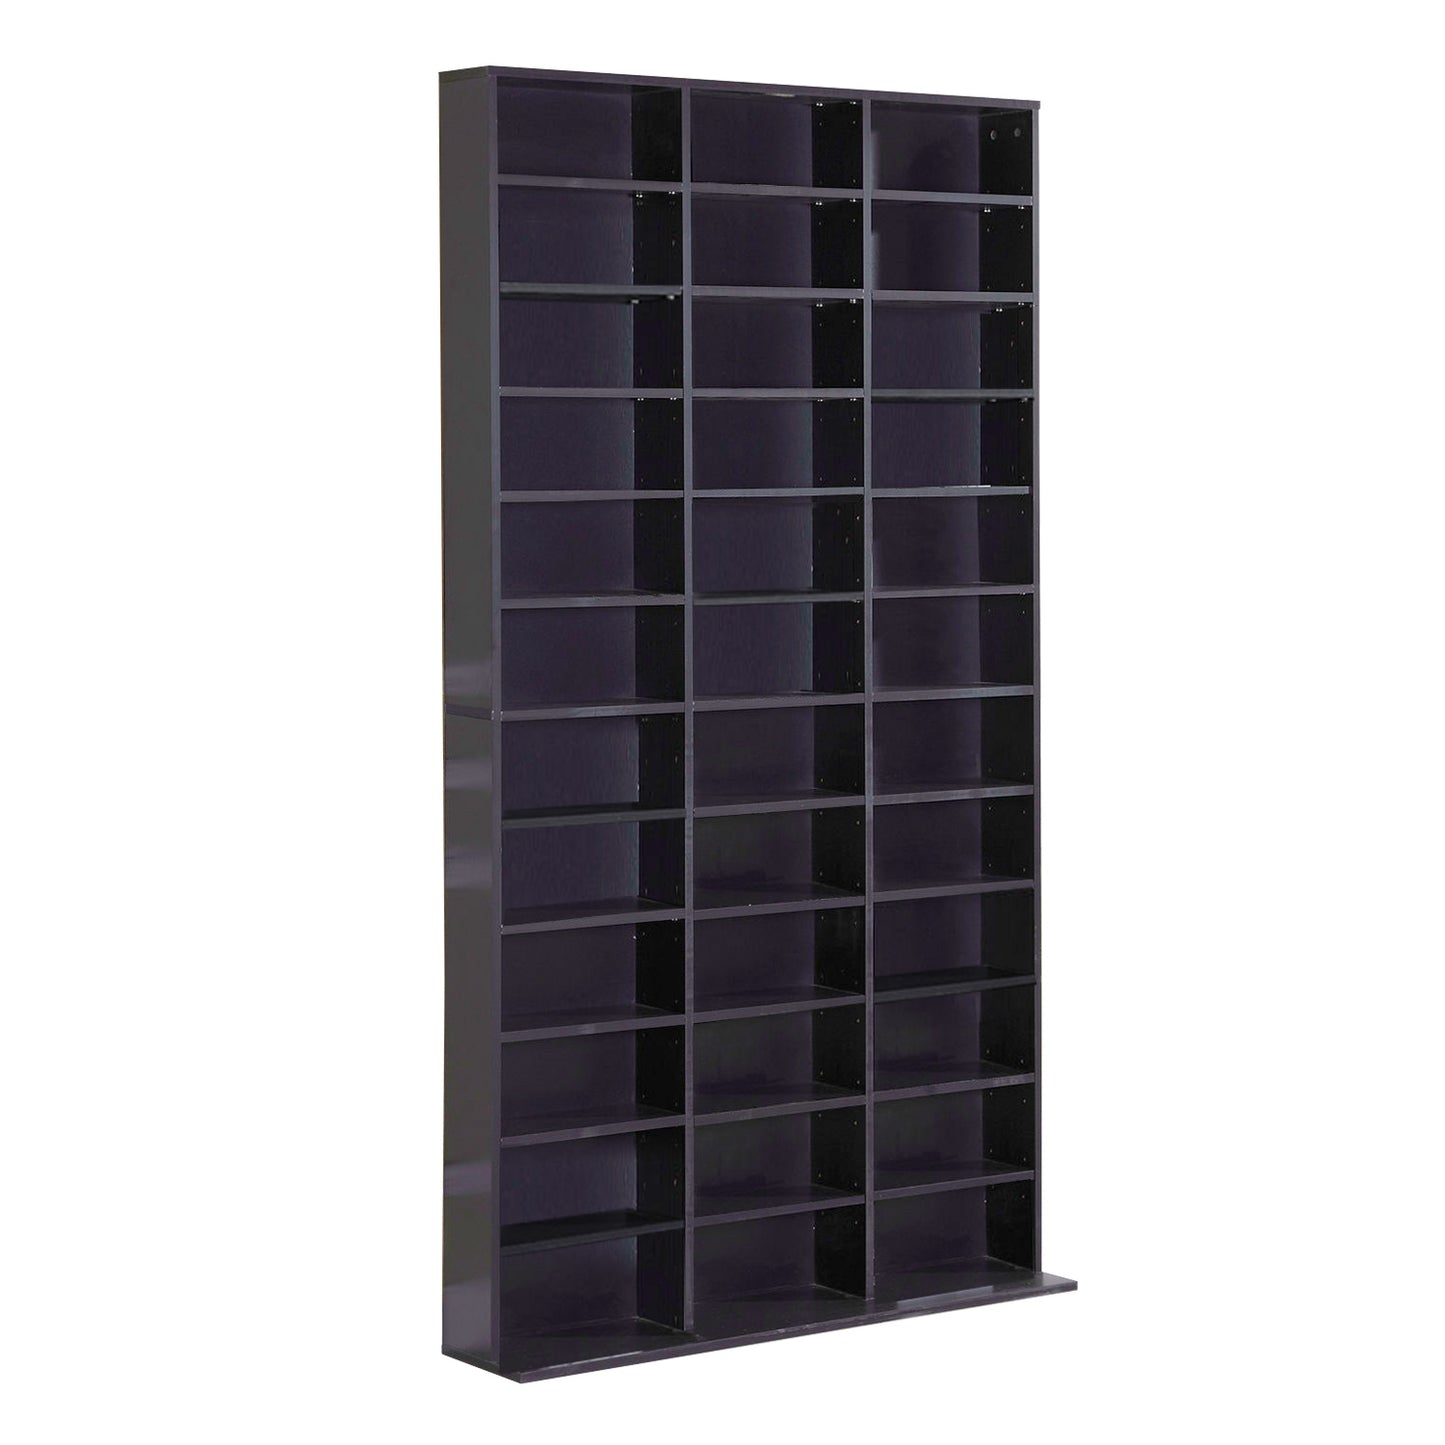 Bookshelf, Shelf, Shelving Units, CD / DVD Storage Shelf, Storage Unit for 1116 CDs, 102 x 24 x 195 cm, Black, HOMCOM, 2